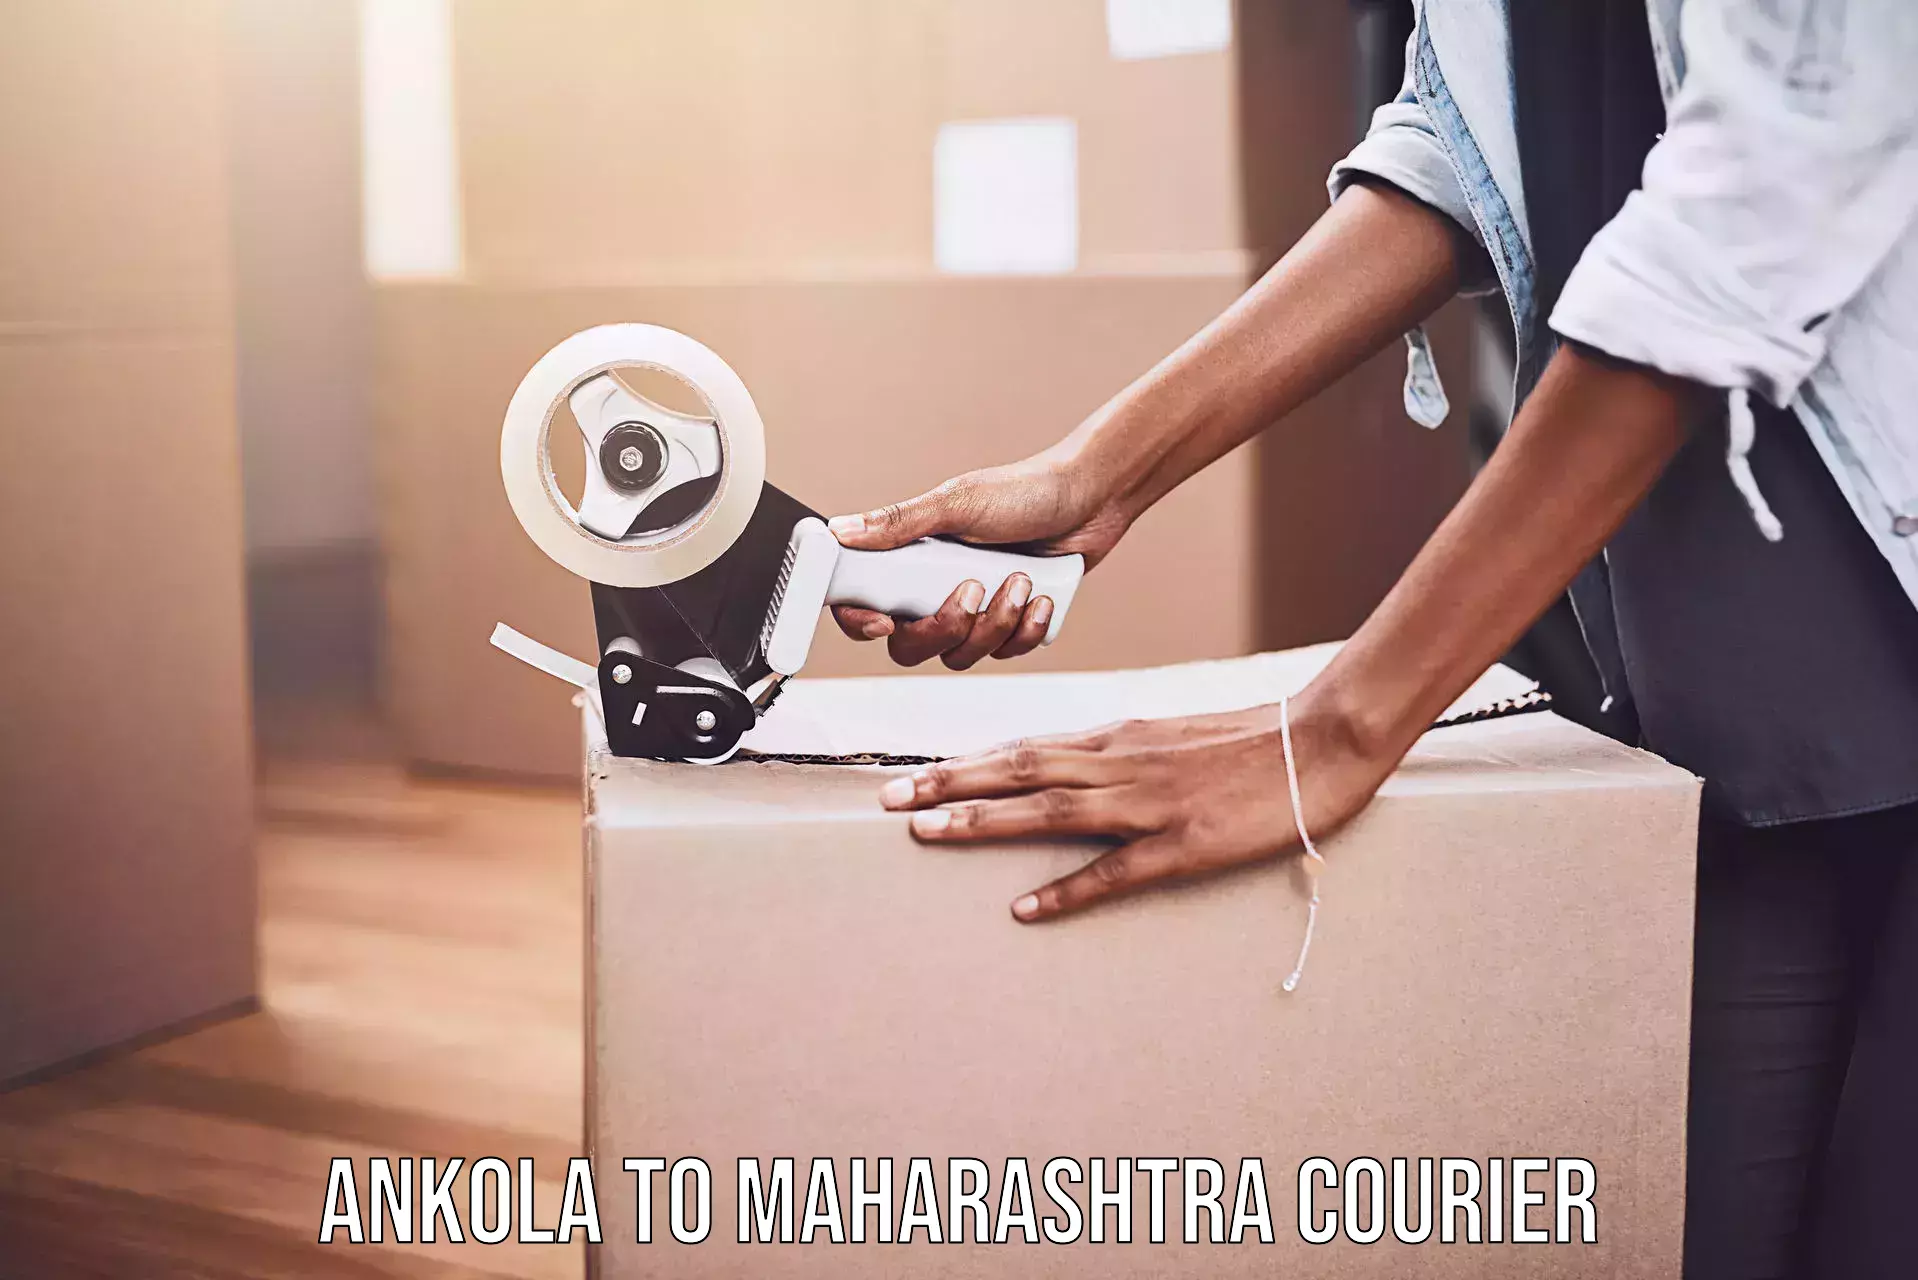 International courier networks Ankola to Mahabaleshwar